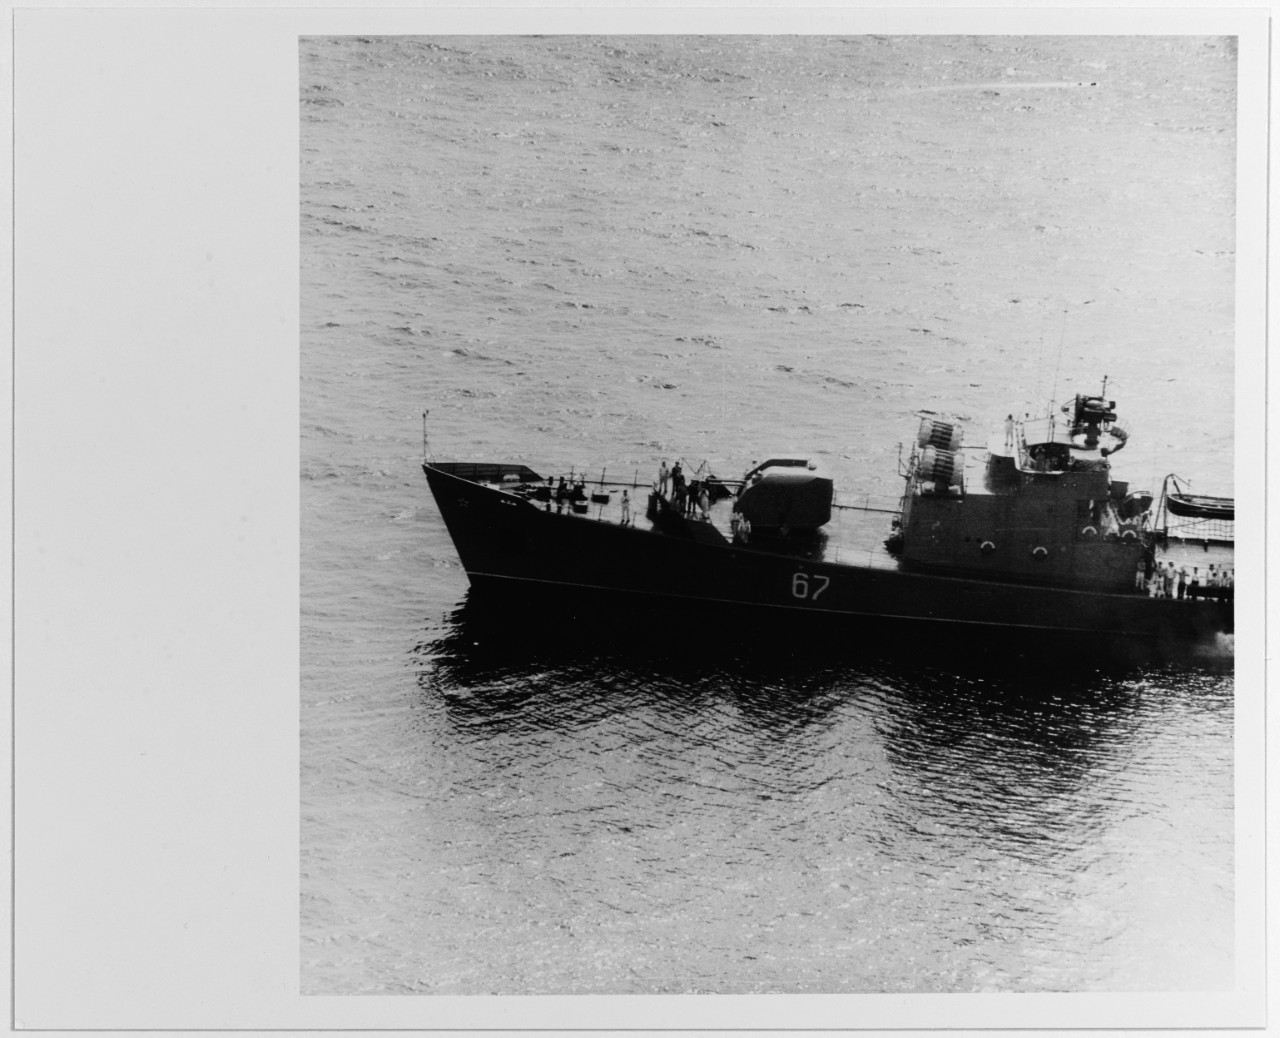 Mirka-class ocean escort in the Baltic Sea